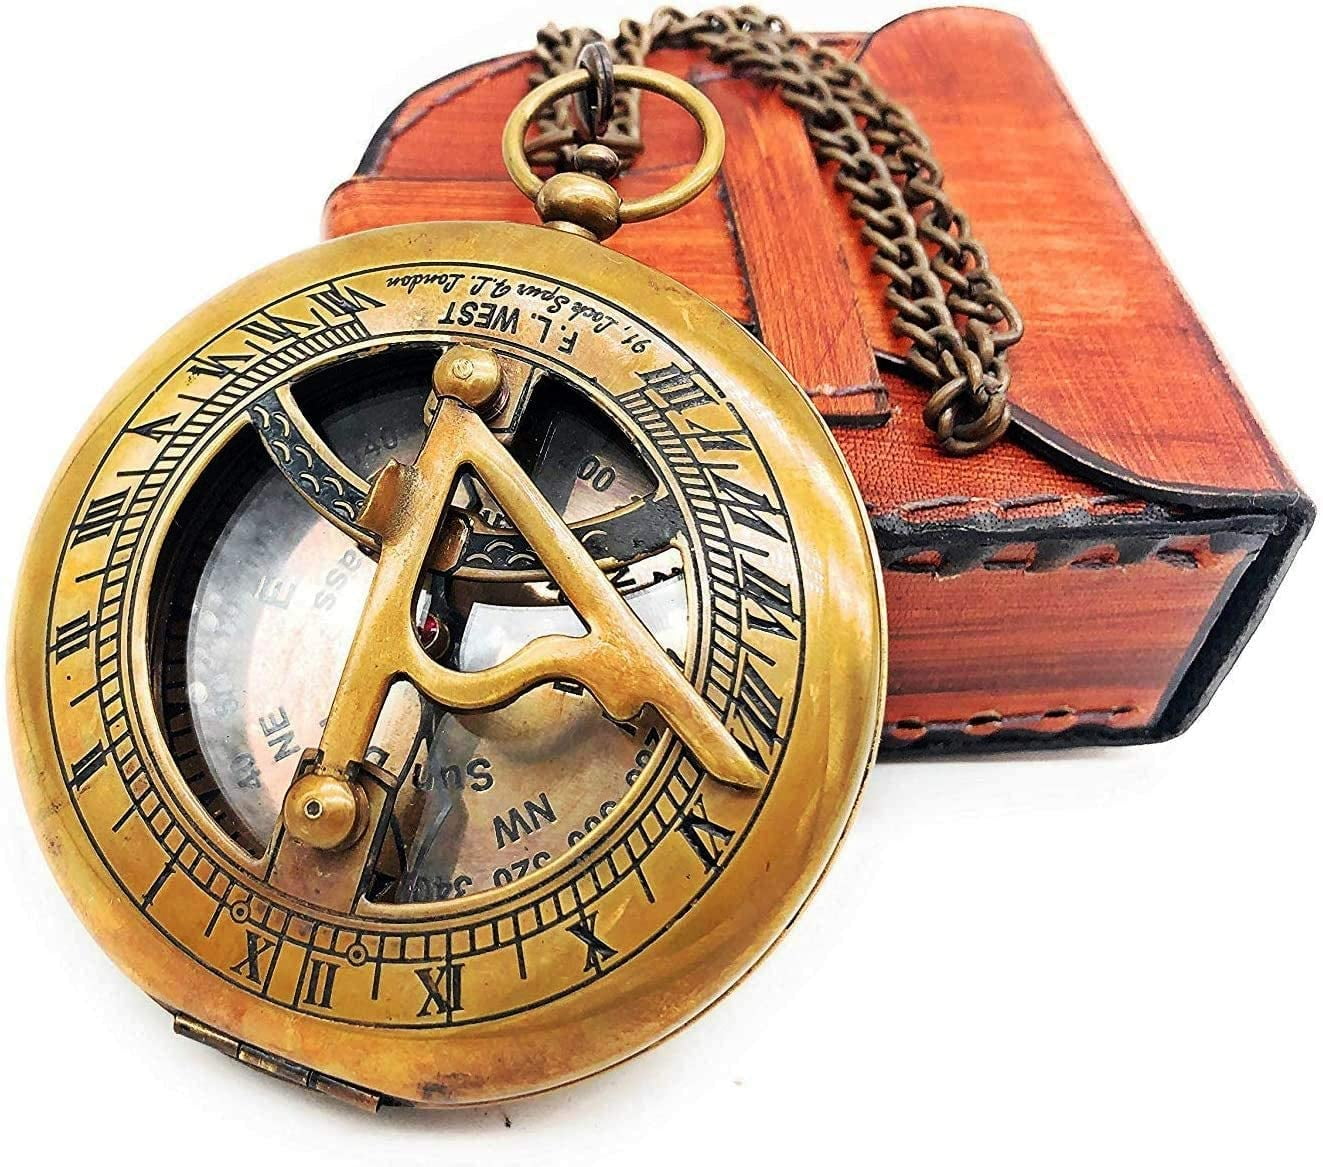 NauticalMart Sundial Compass, Antique Steampunk Brass Sundial Compass,  Sundial Watch with Leather case Sundial 